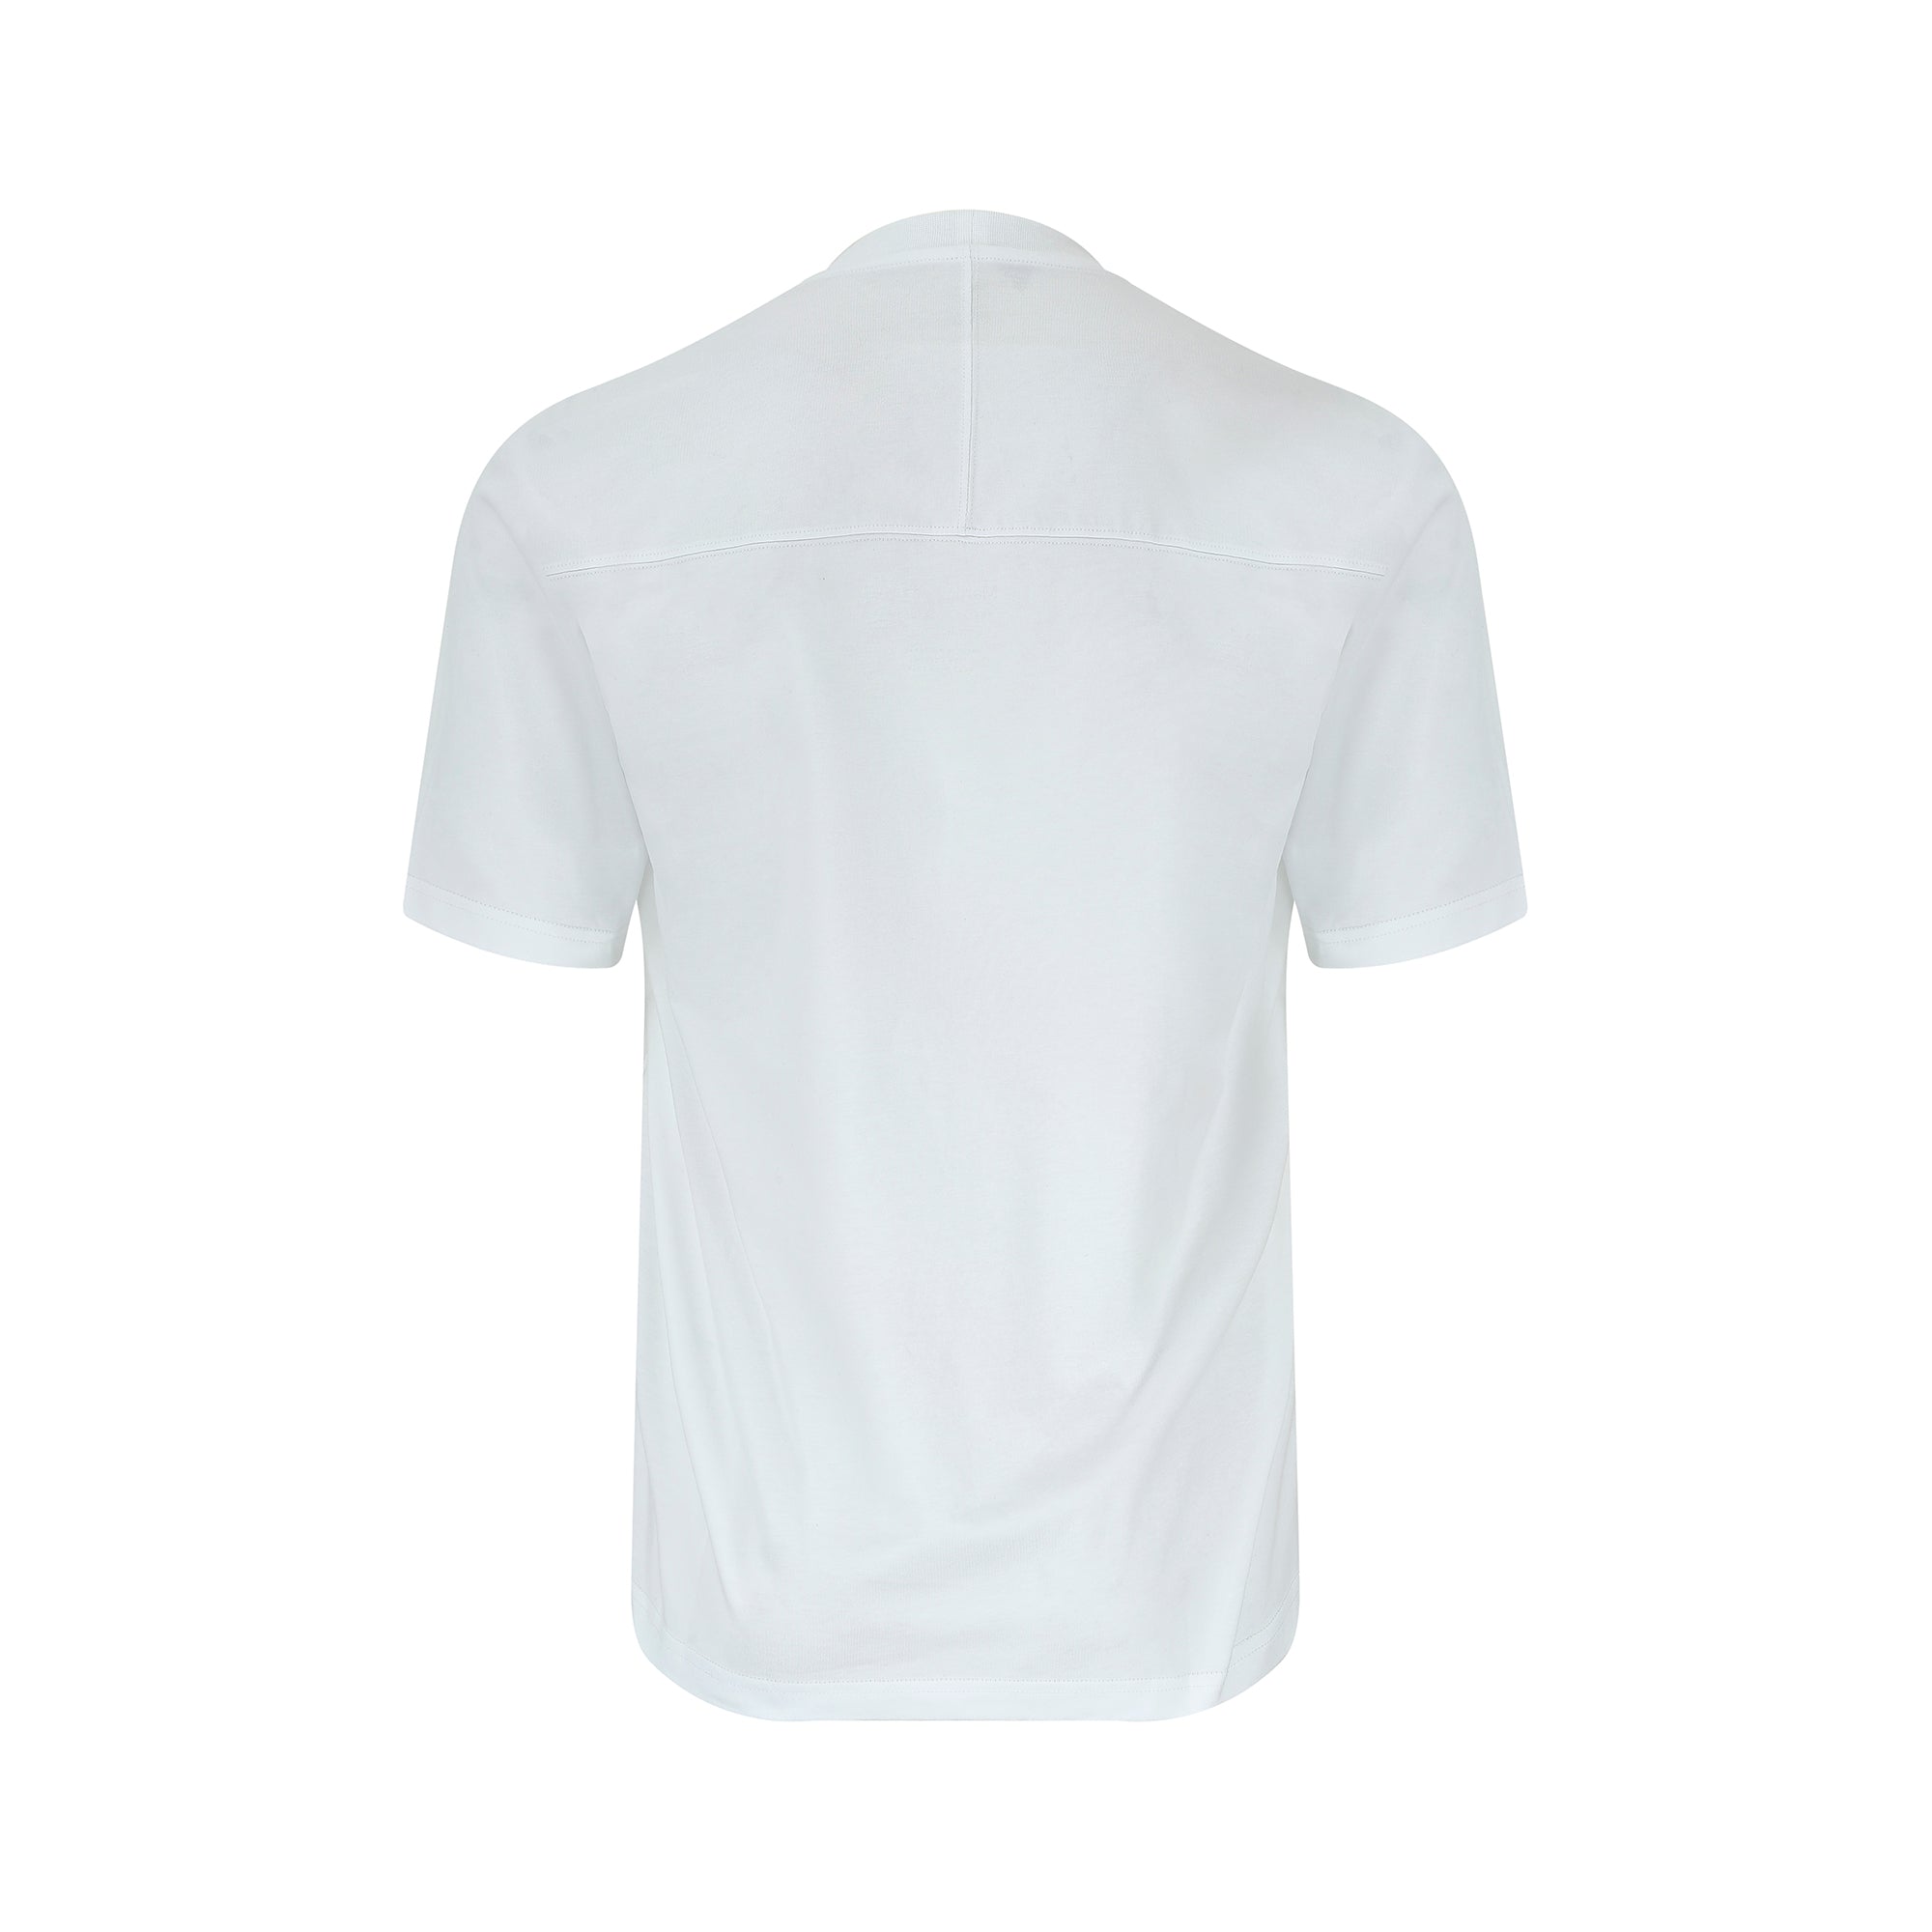 Martine Rose Pulled Neck T-Shirt - White - MRAW23-635